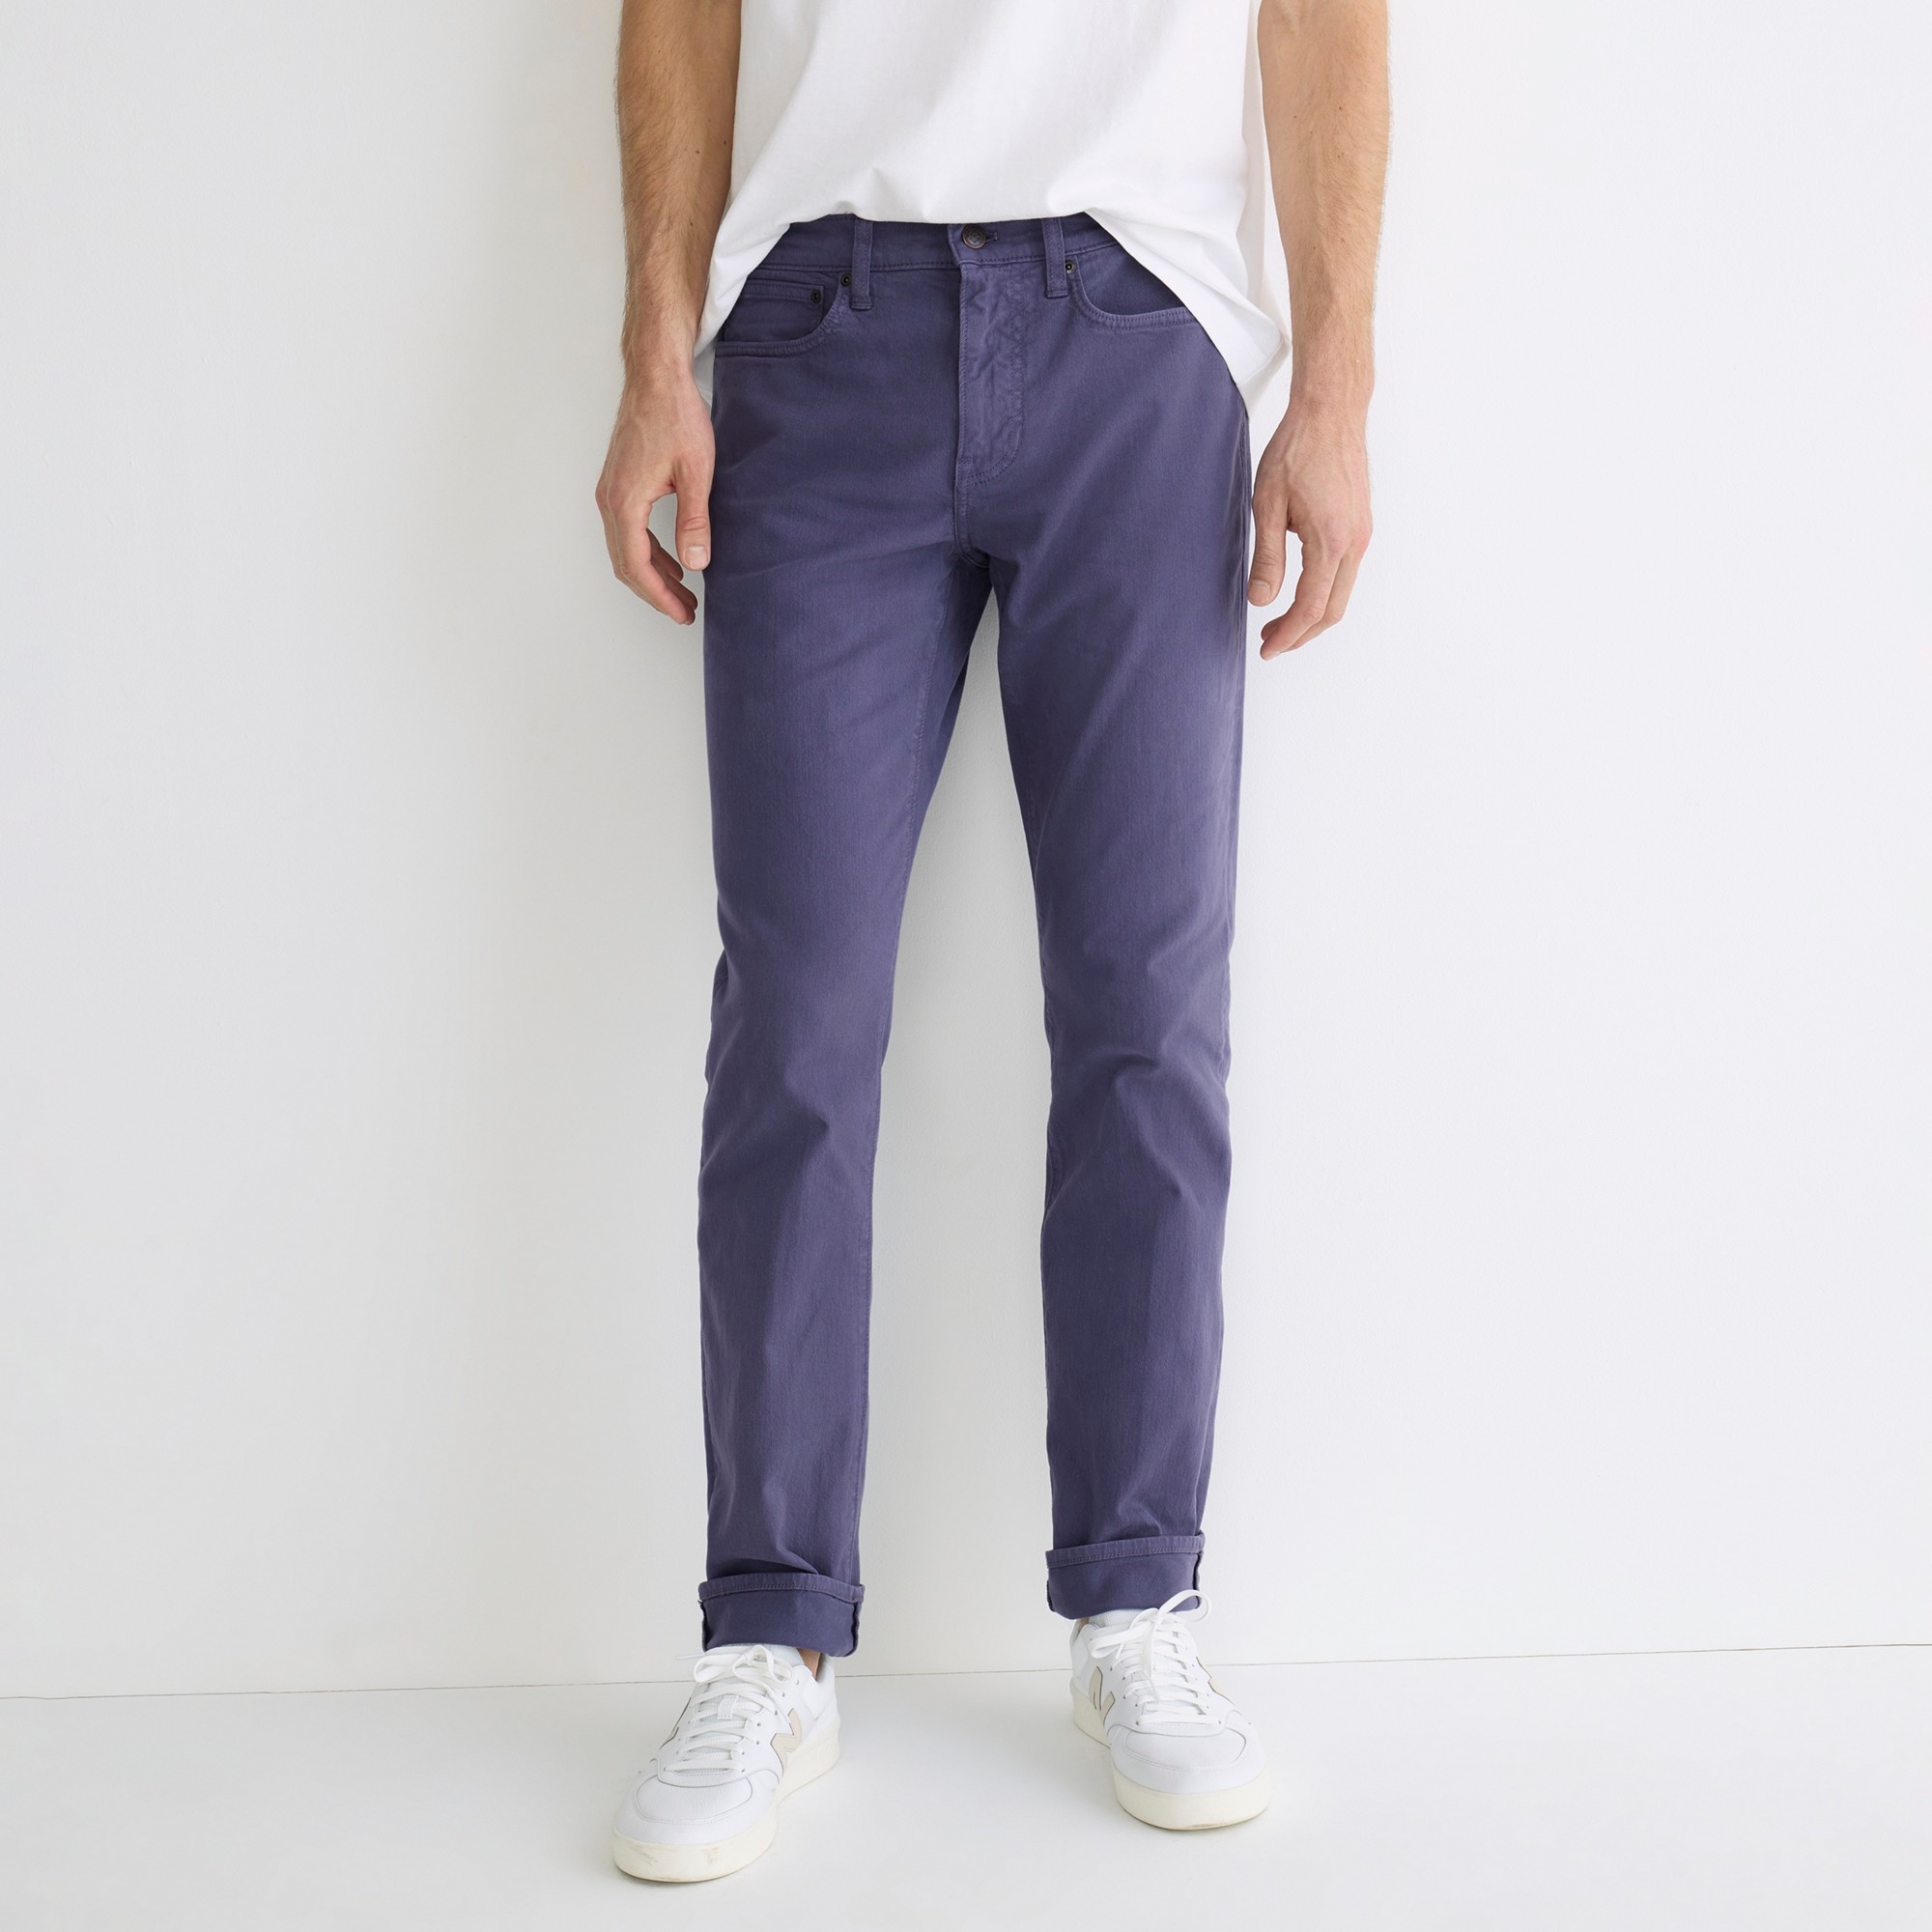 Jcrew 770u0026trade; Straight-fit garment-dyed five-pocket pant